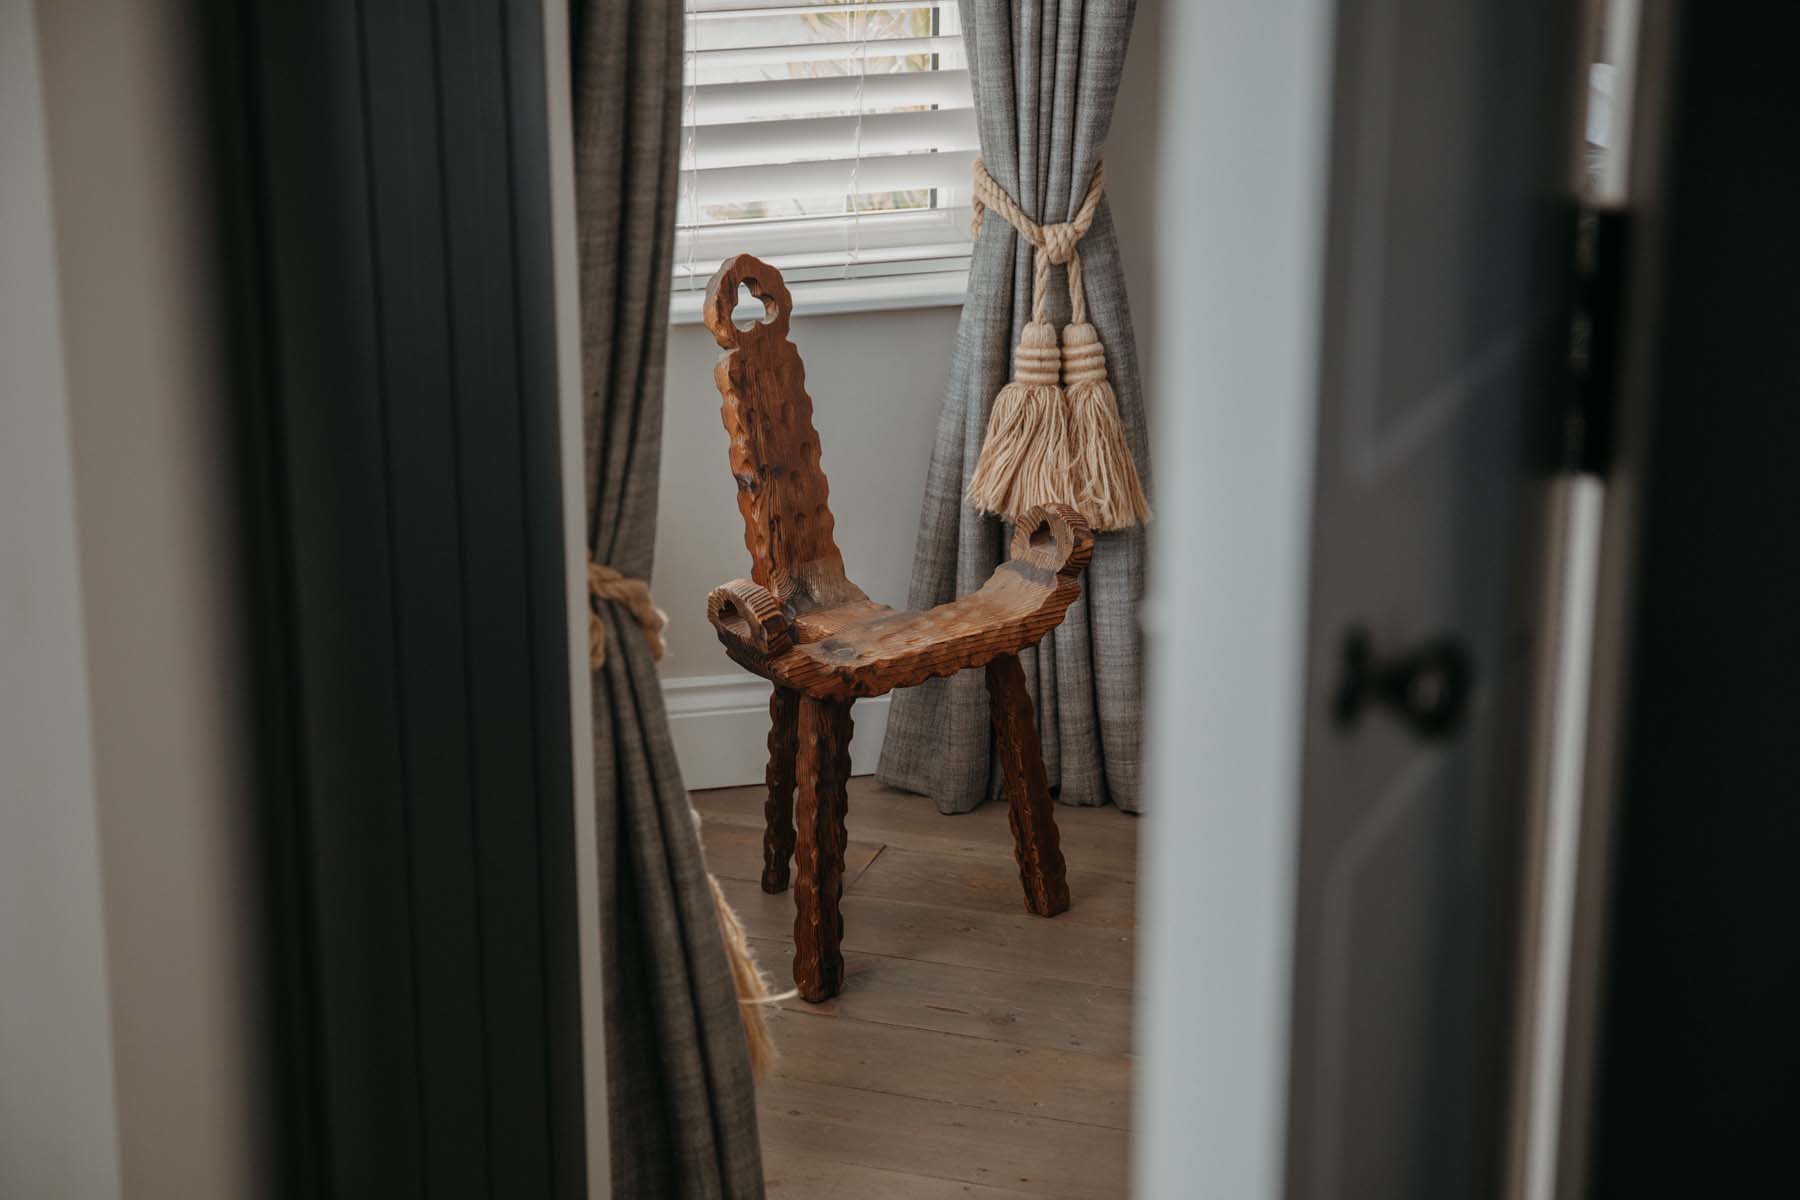 Folk wooden chair by a window